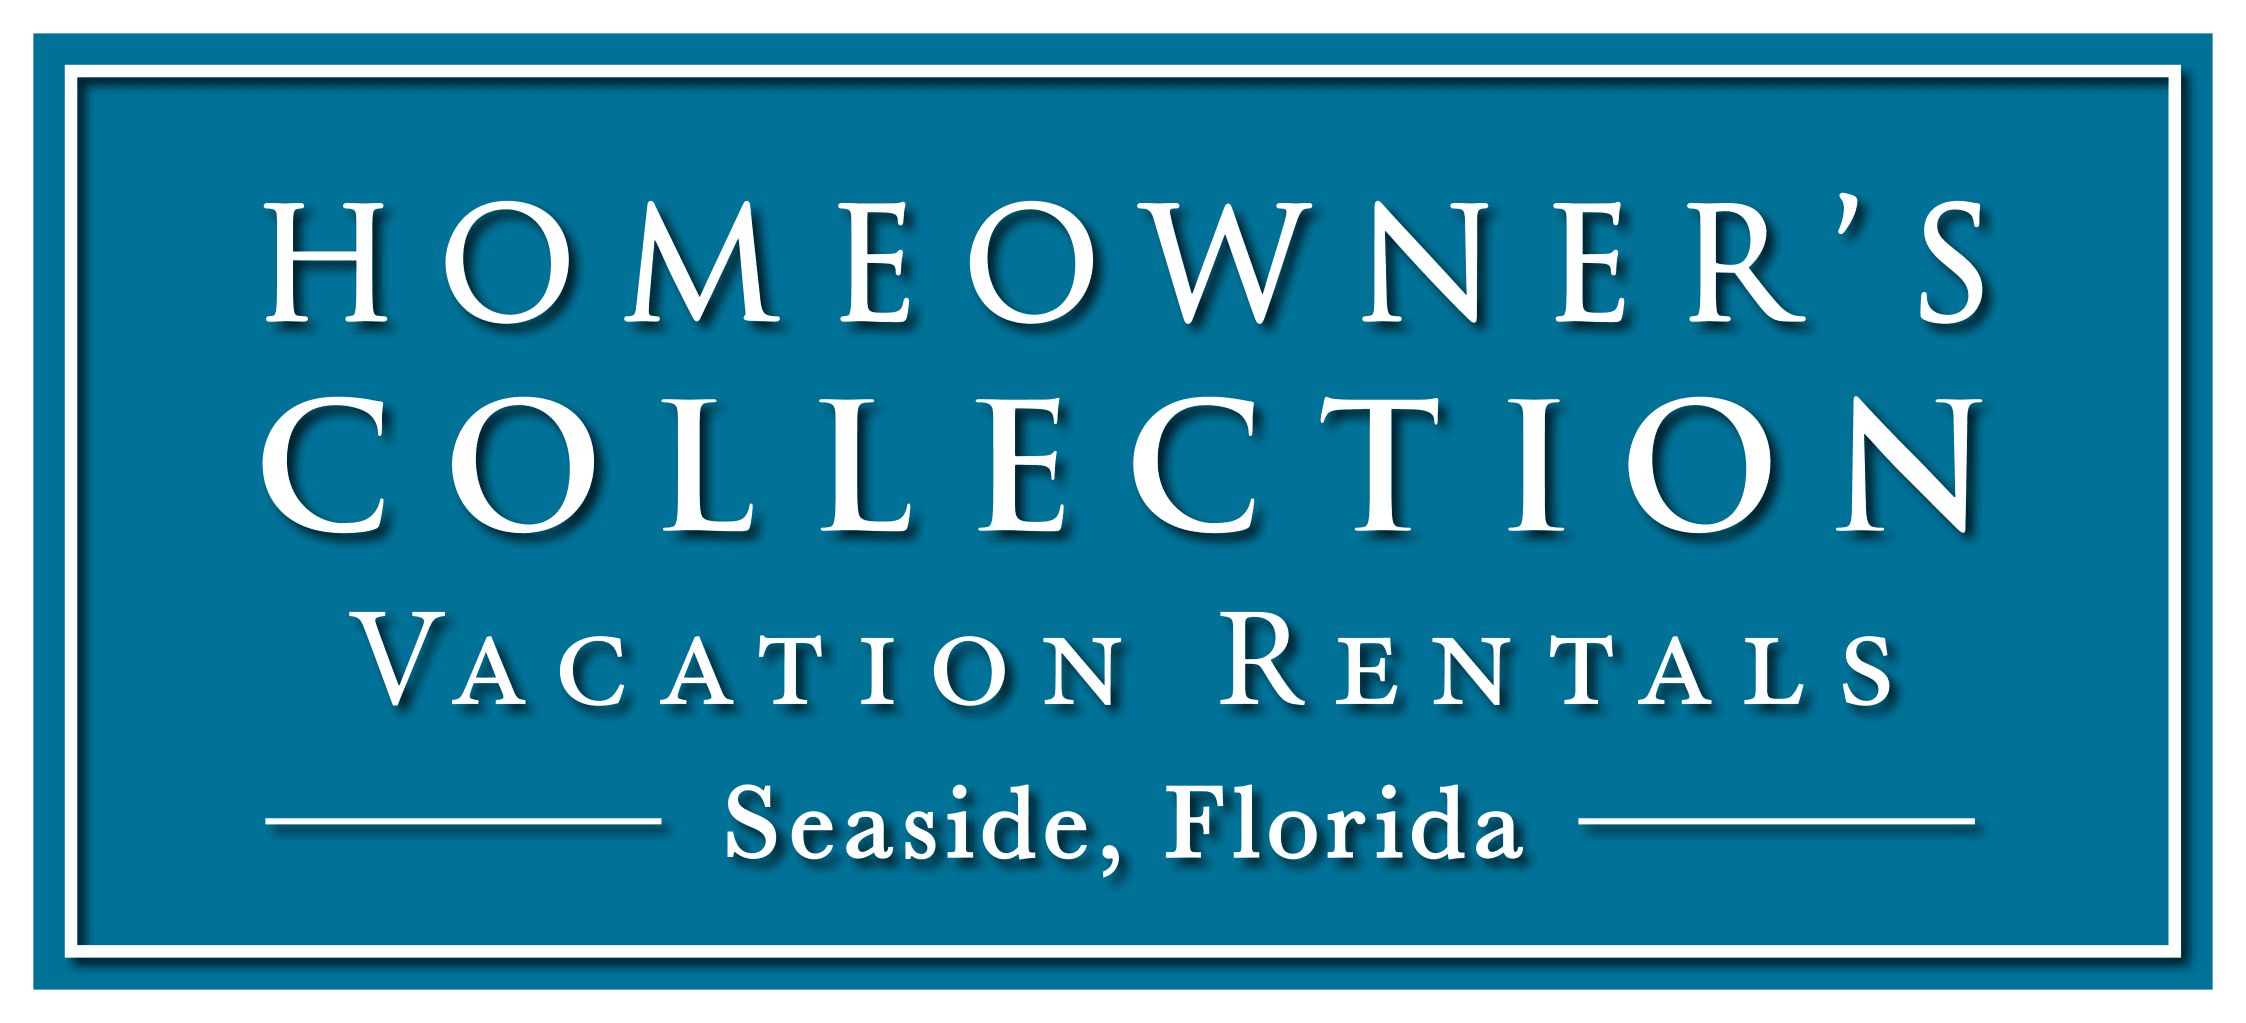 Seaside Florida Vacation Rental Provider Launches 20% Fall Savings